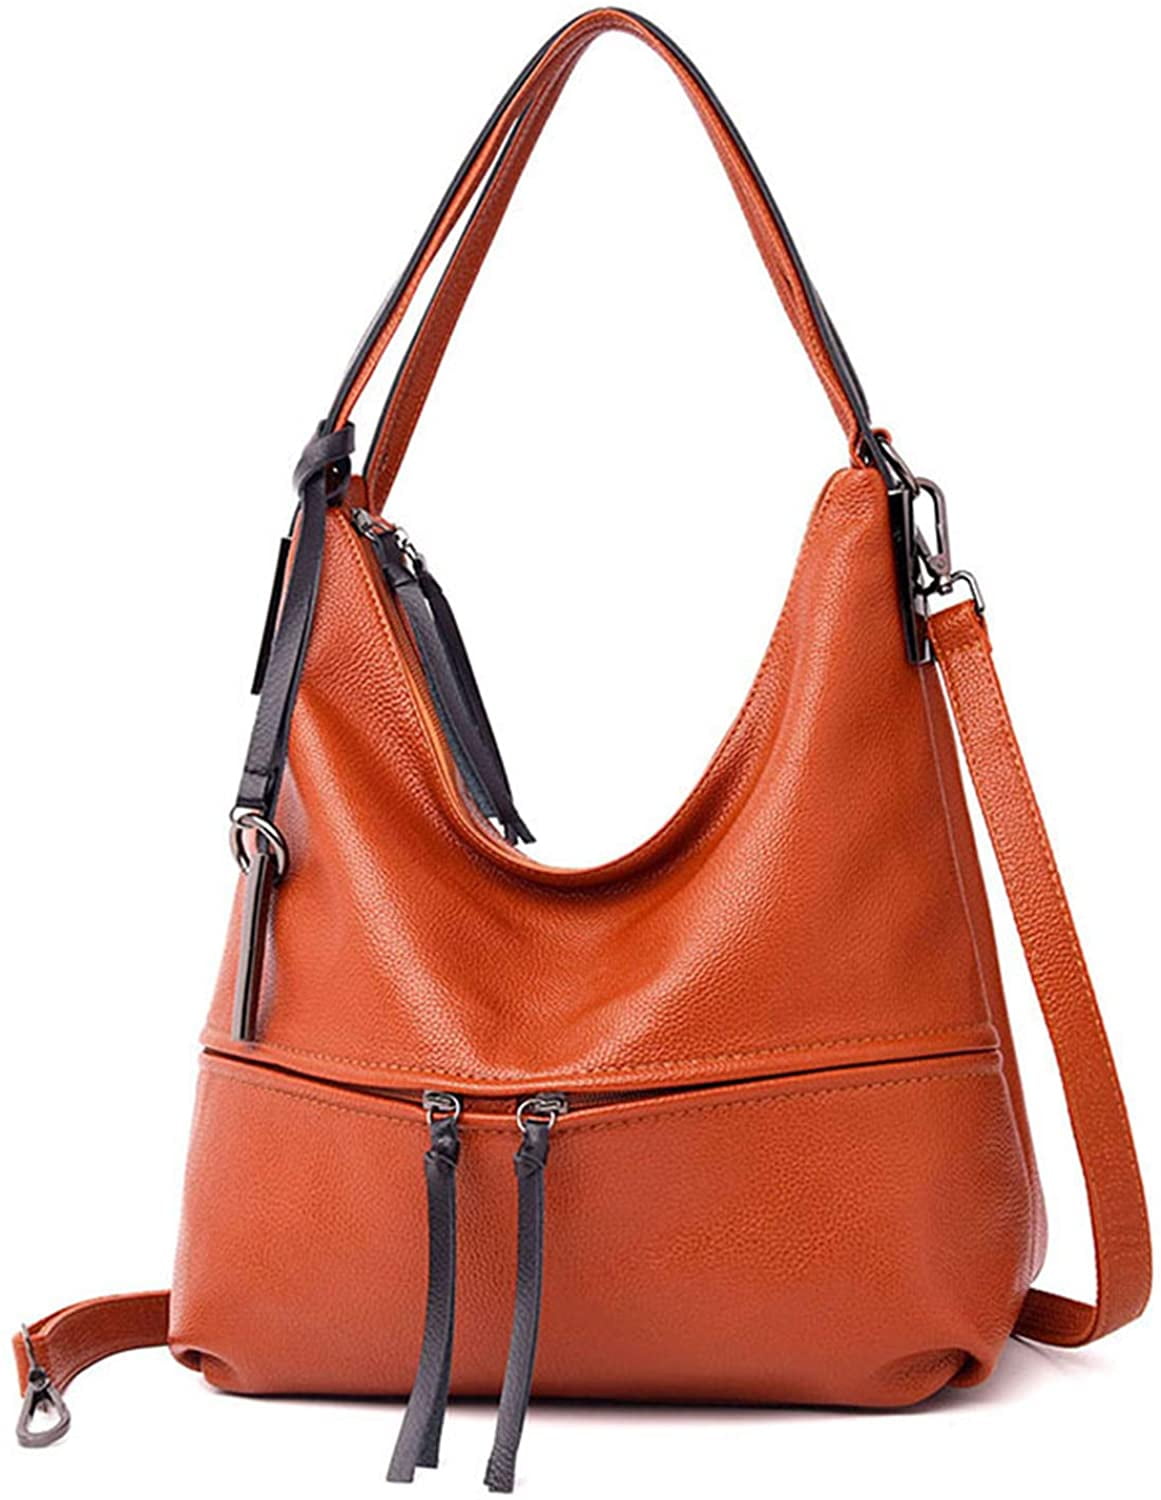 Women Top Handle Handbag Satchel Shoulder Bag Tote Purse Crossbody Bags Leather Hobo Bags Travel 